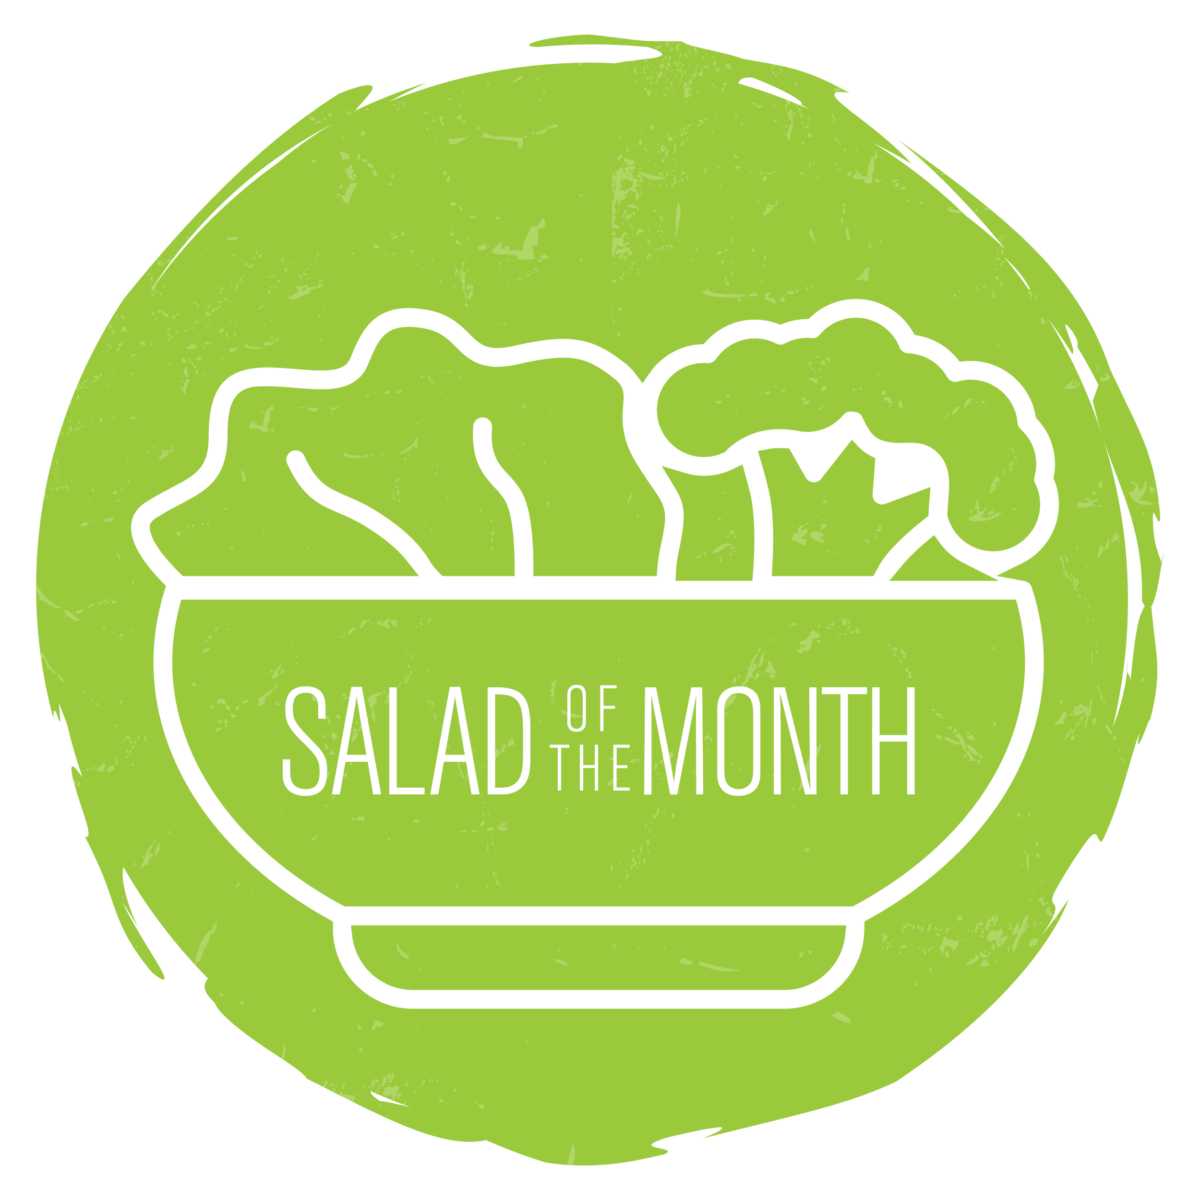 Lettuce clipart cabbage. Food zinburger salad of